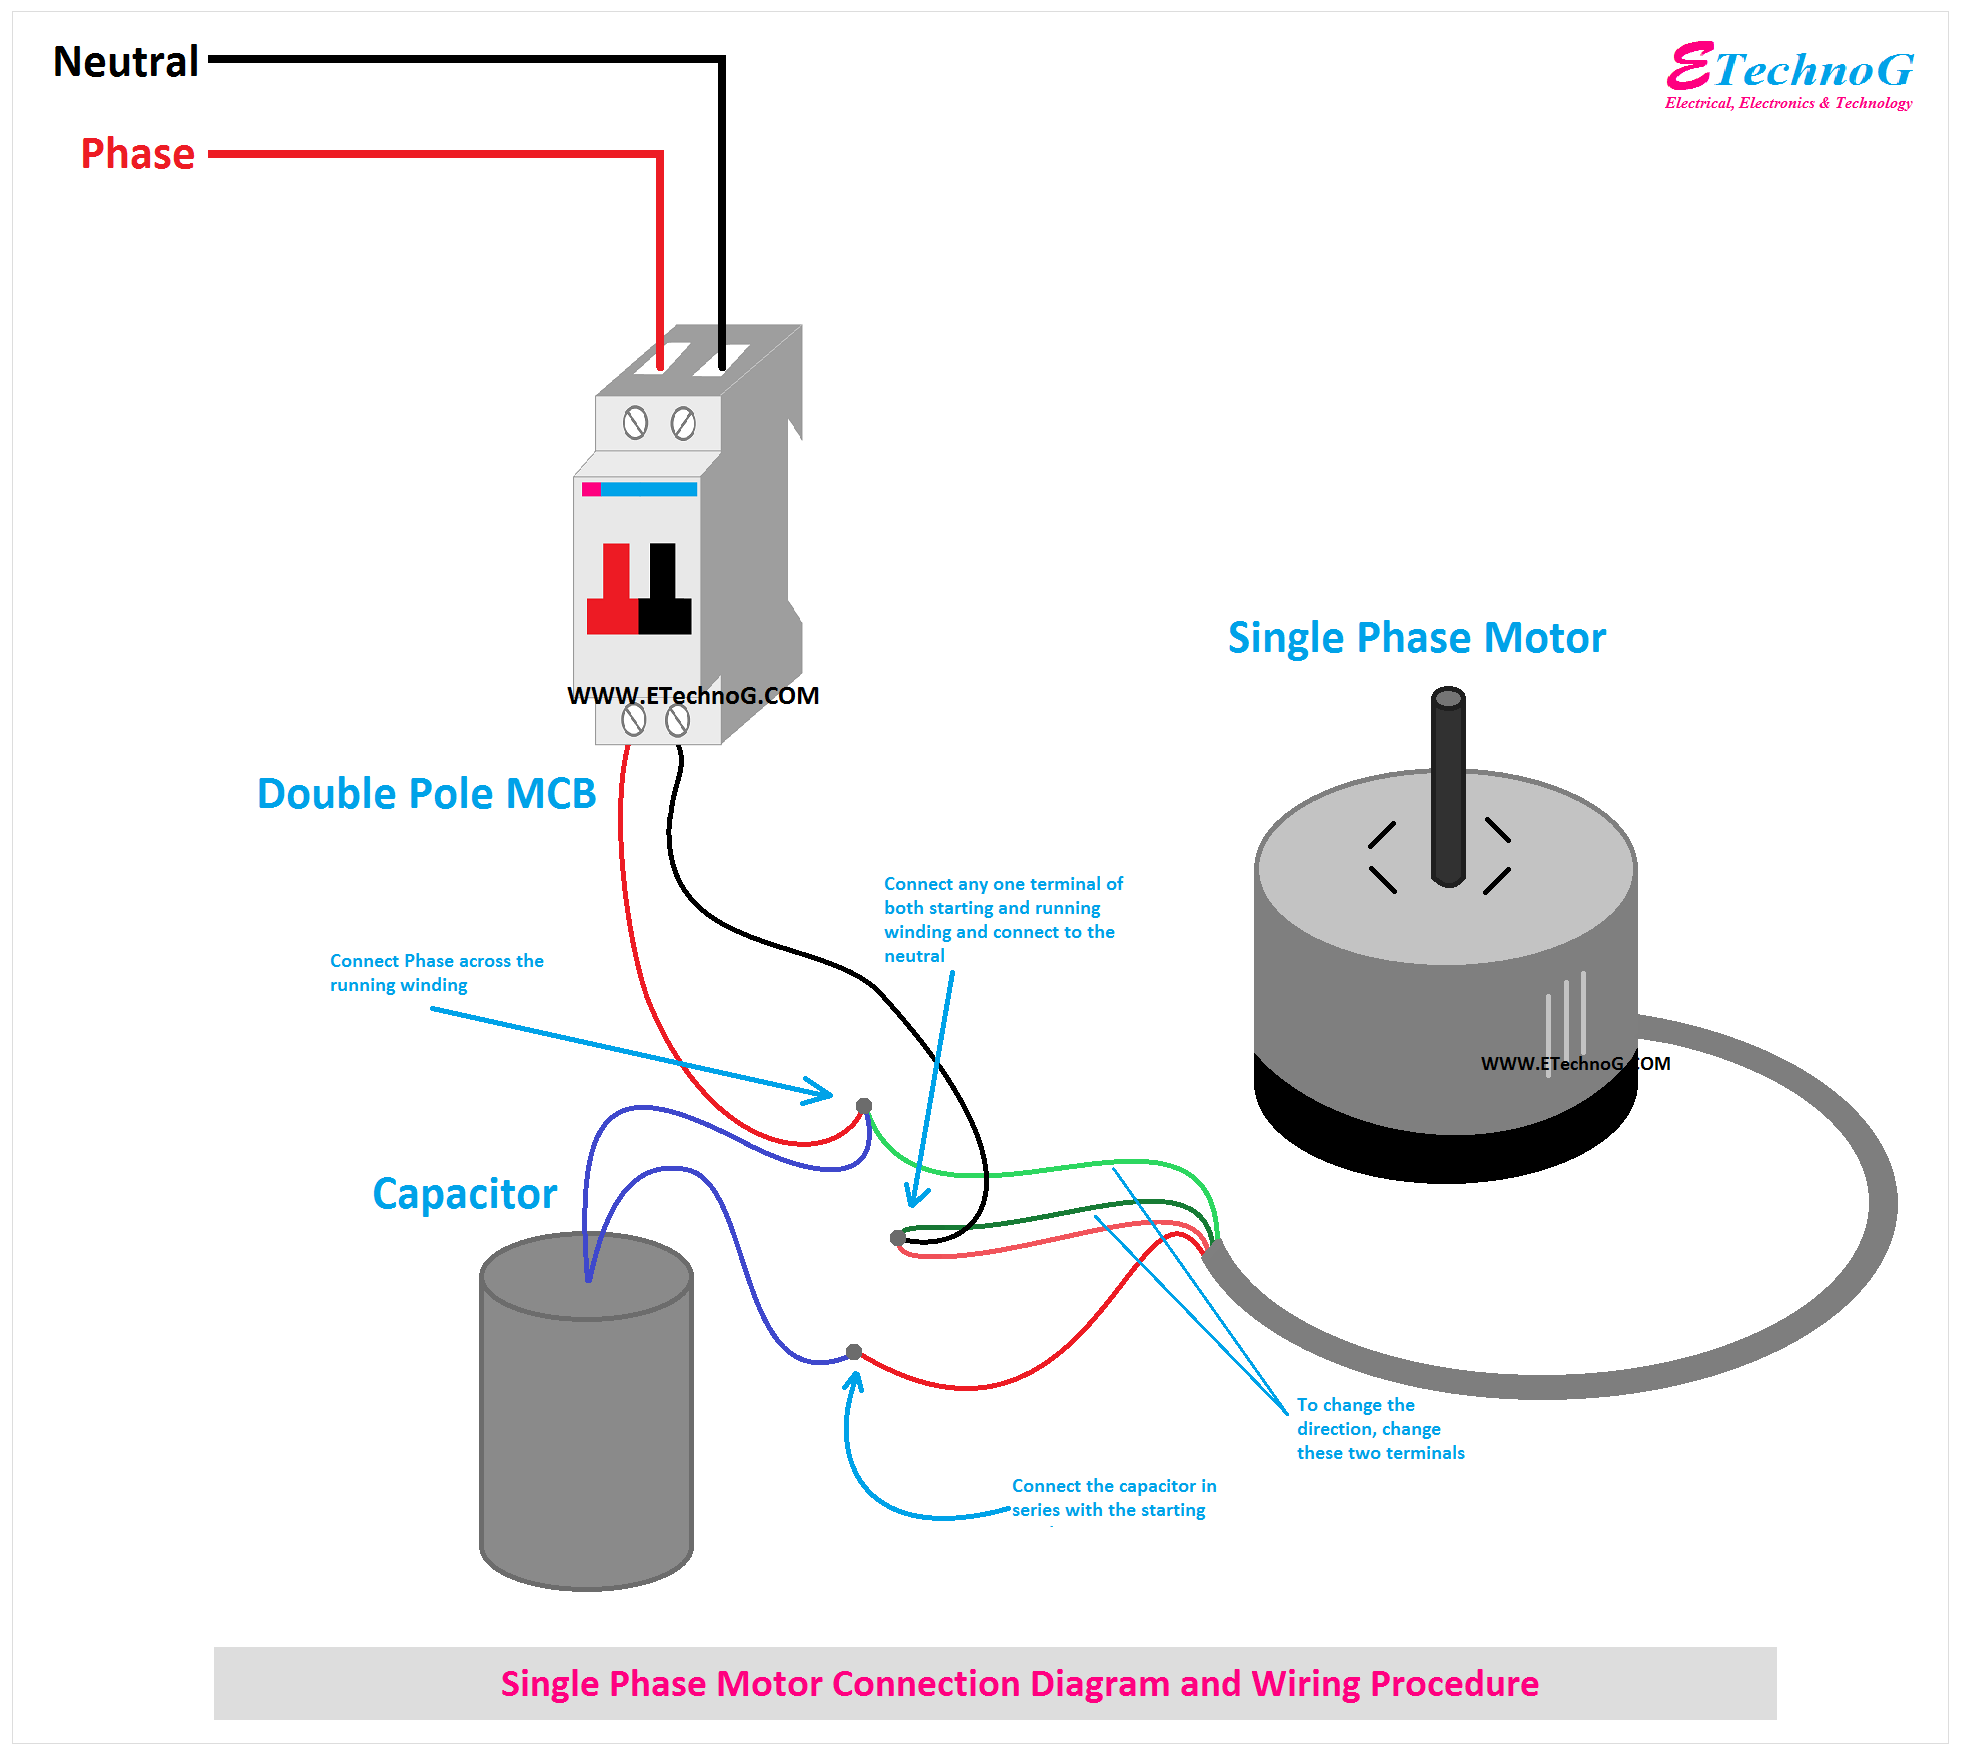 Single Phase Motor Connection Diagram and Wiring Procedure - ETechnoG 230V Motor Wiring Diagram ETechnoG